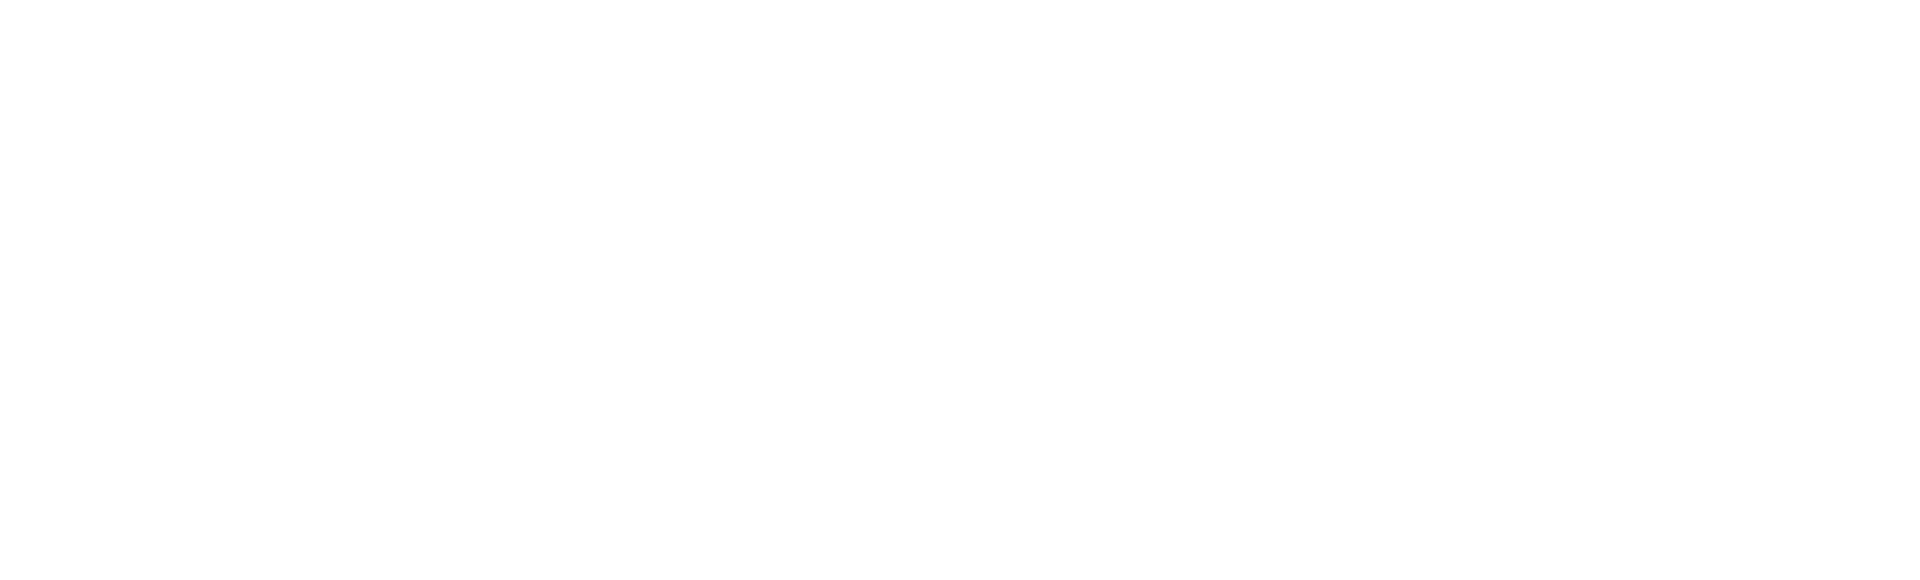 castelli_logo white